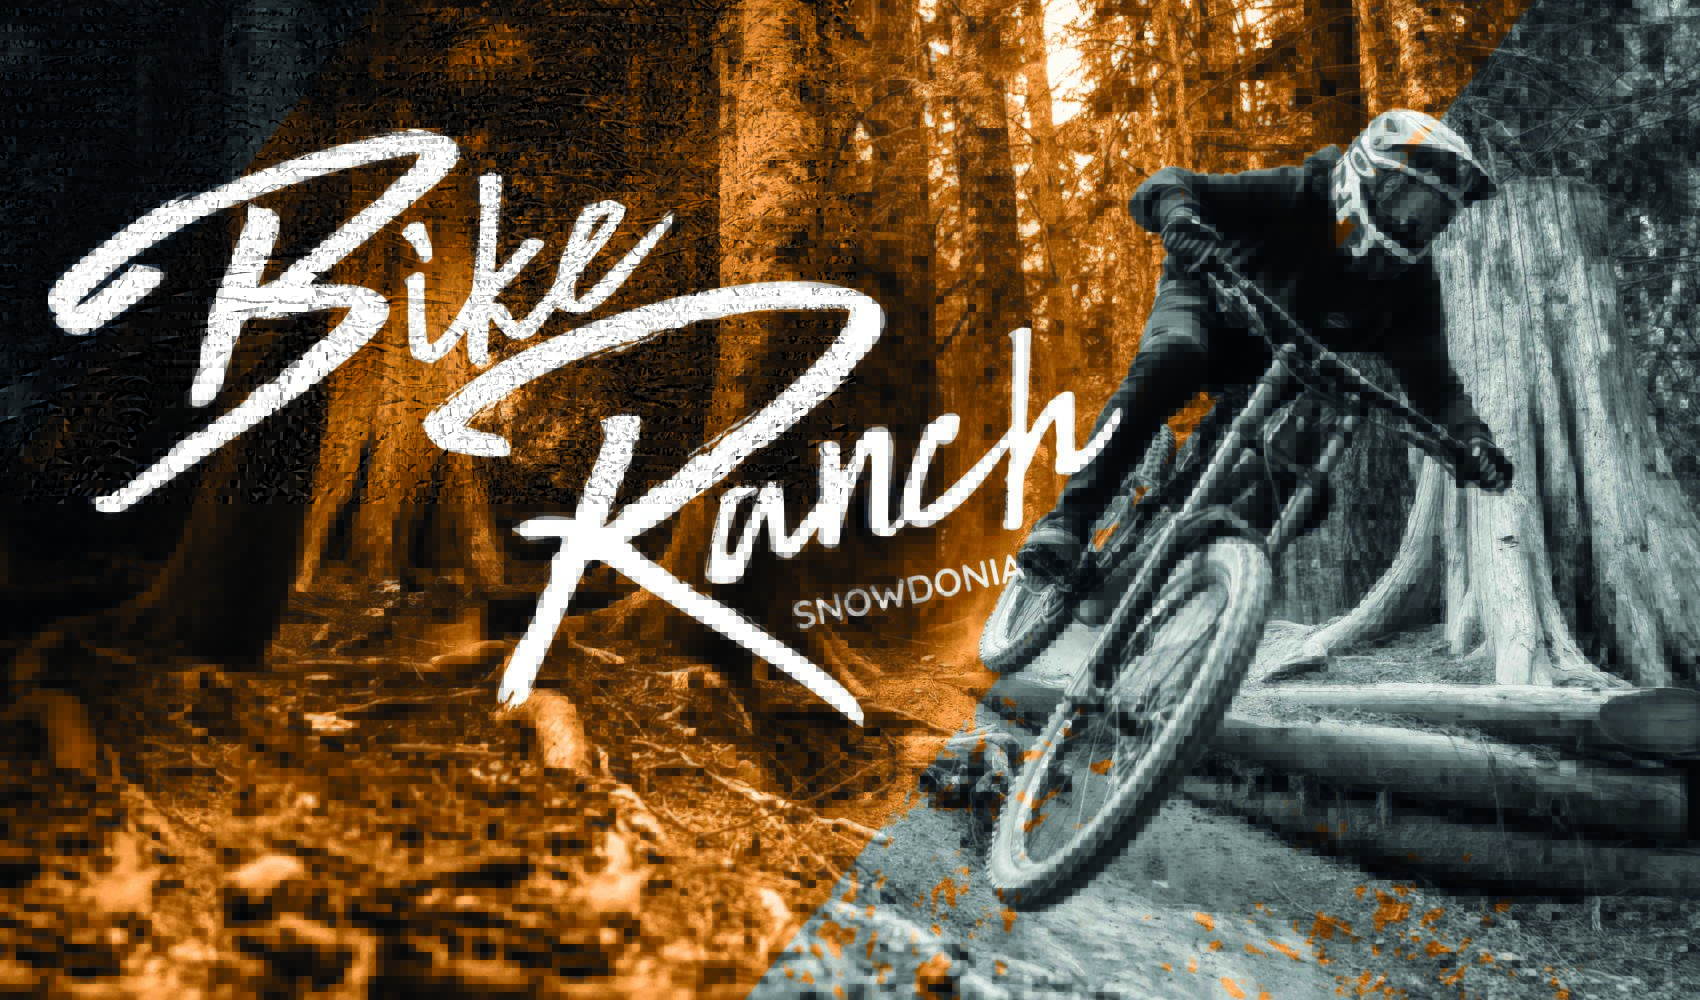 Bike Ranch Snowdonia